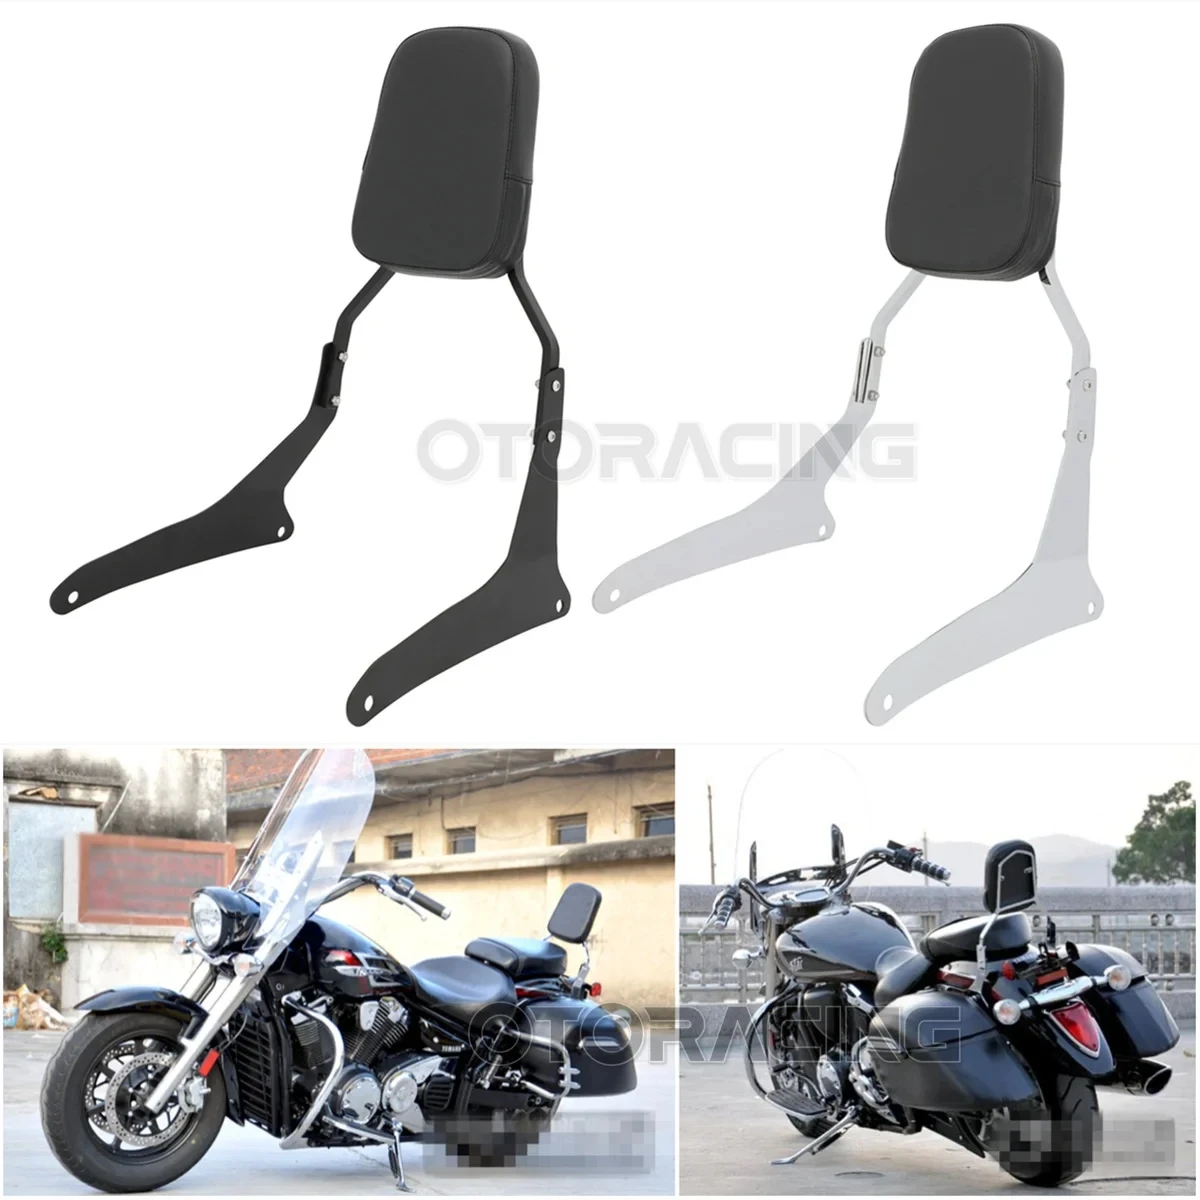 Motorcycle Accessories Passenger Backrest Sissy Bar For Yamaha V-Star 1300 - $119.59